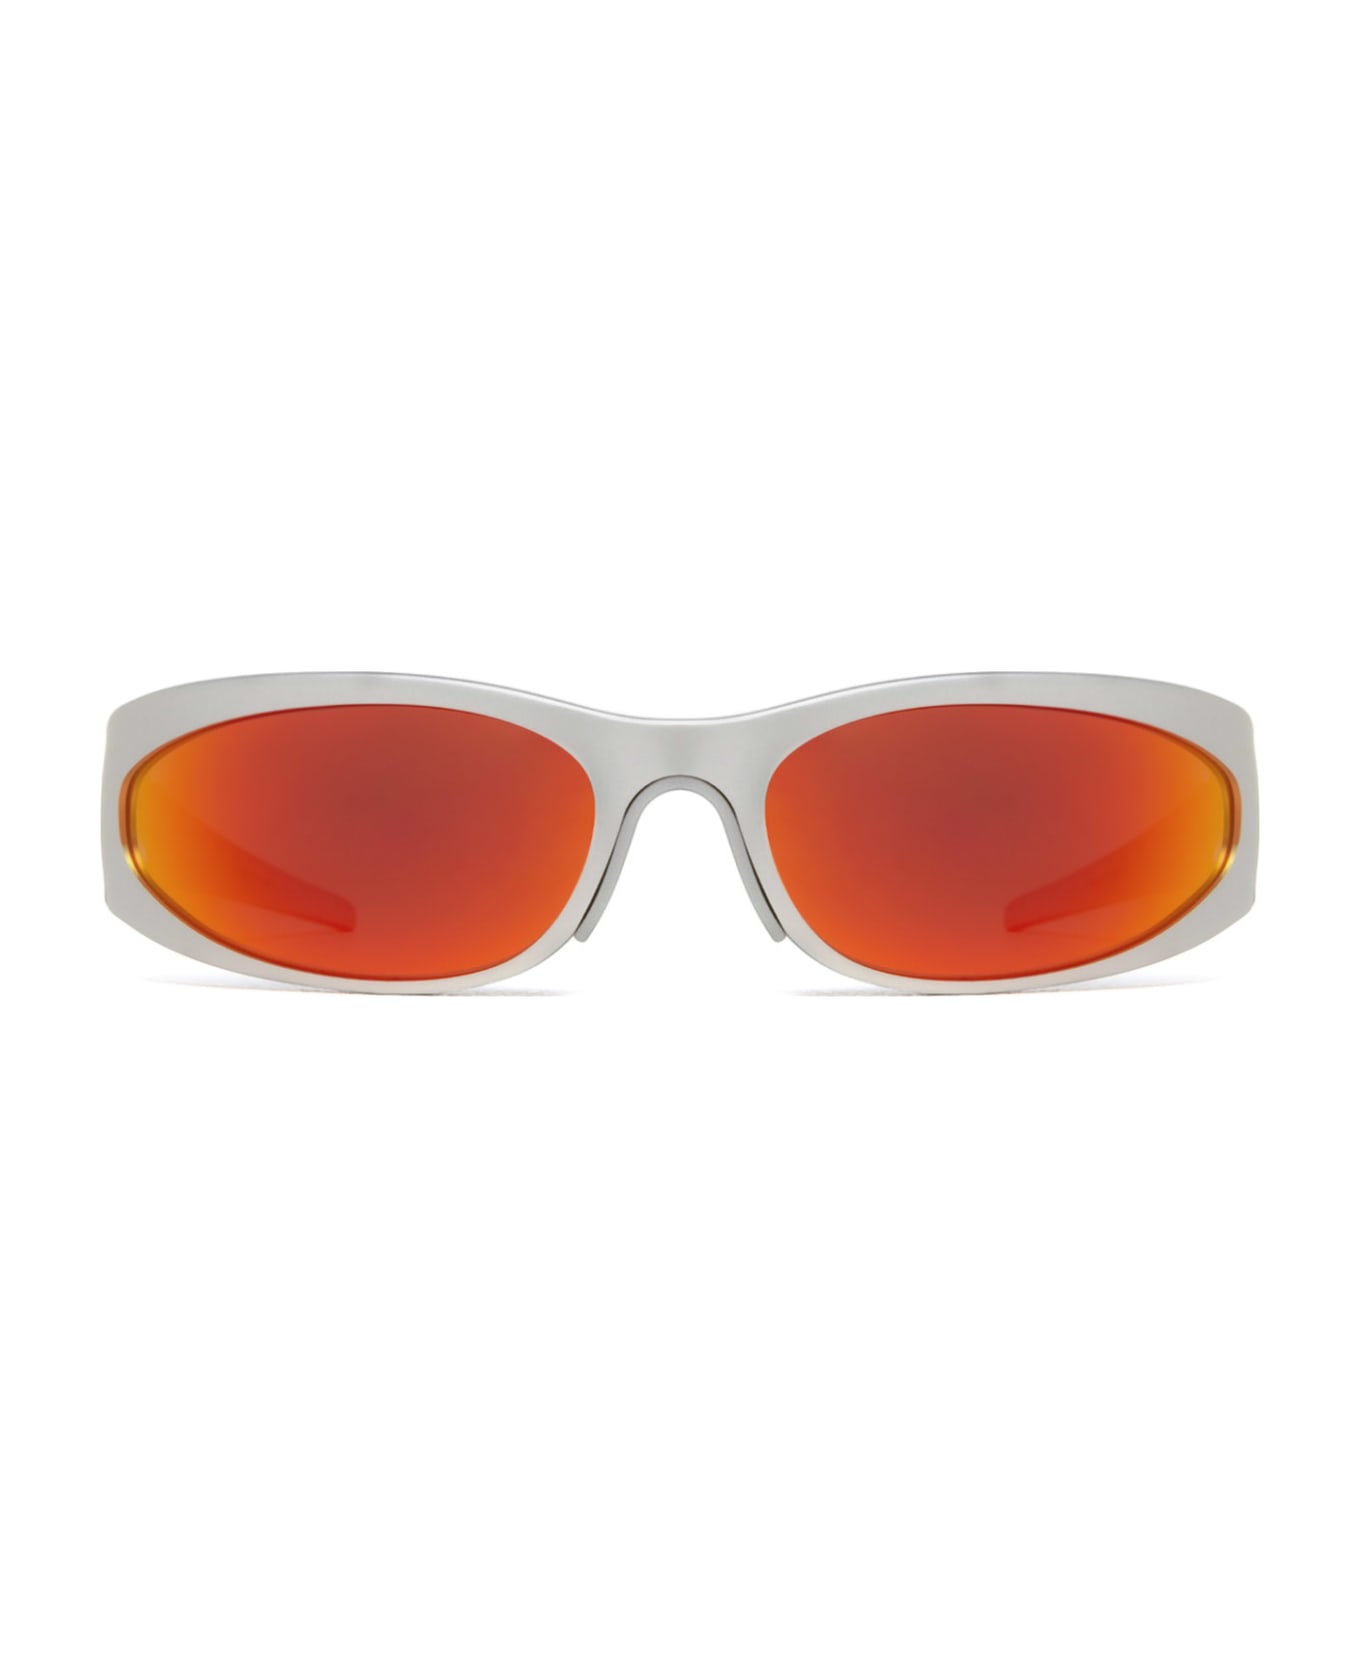 Balenciaga Eyewear Bb0290s Sunglasses - 004 SILVER SILVER RED